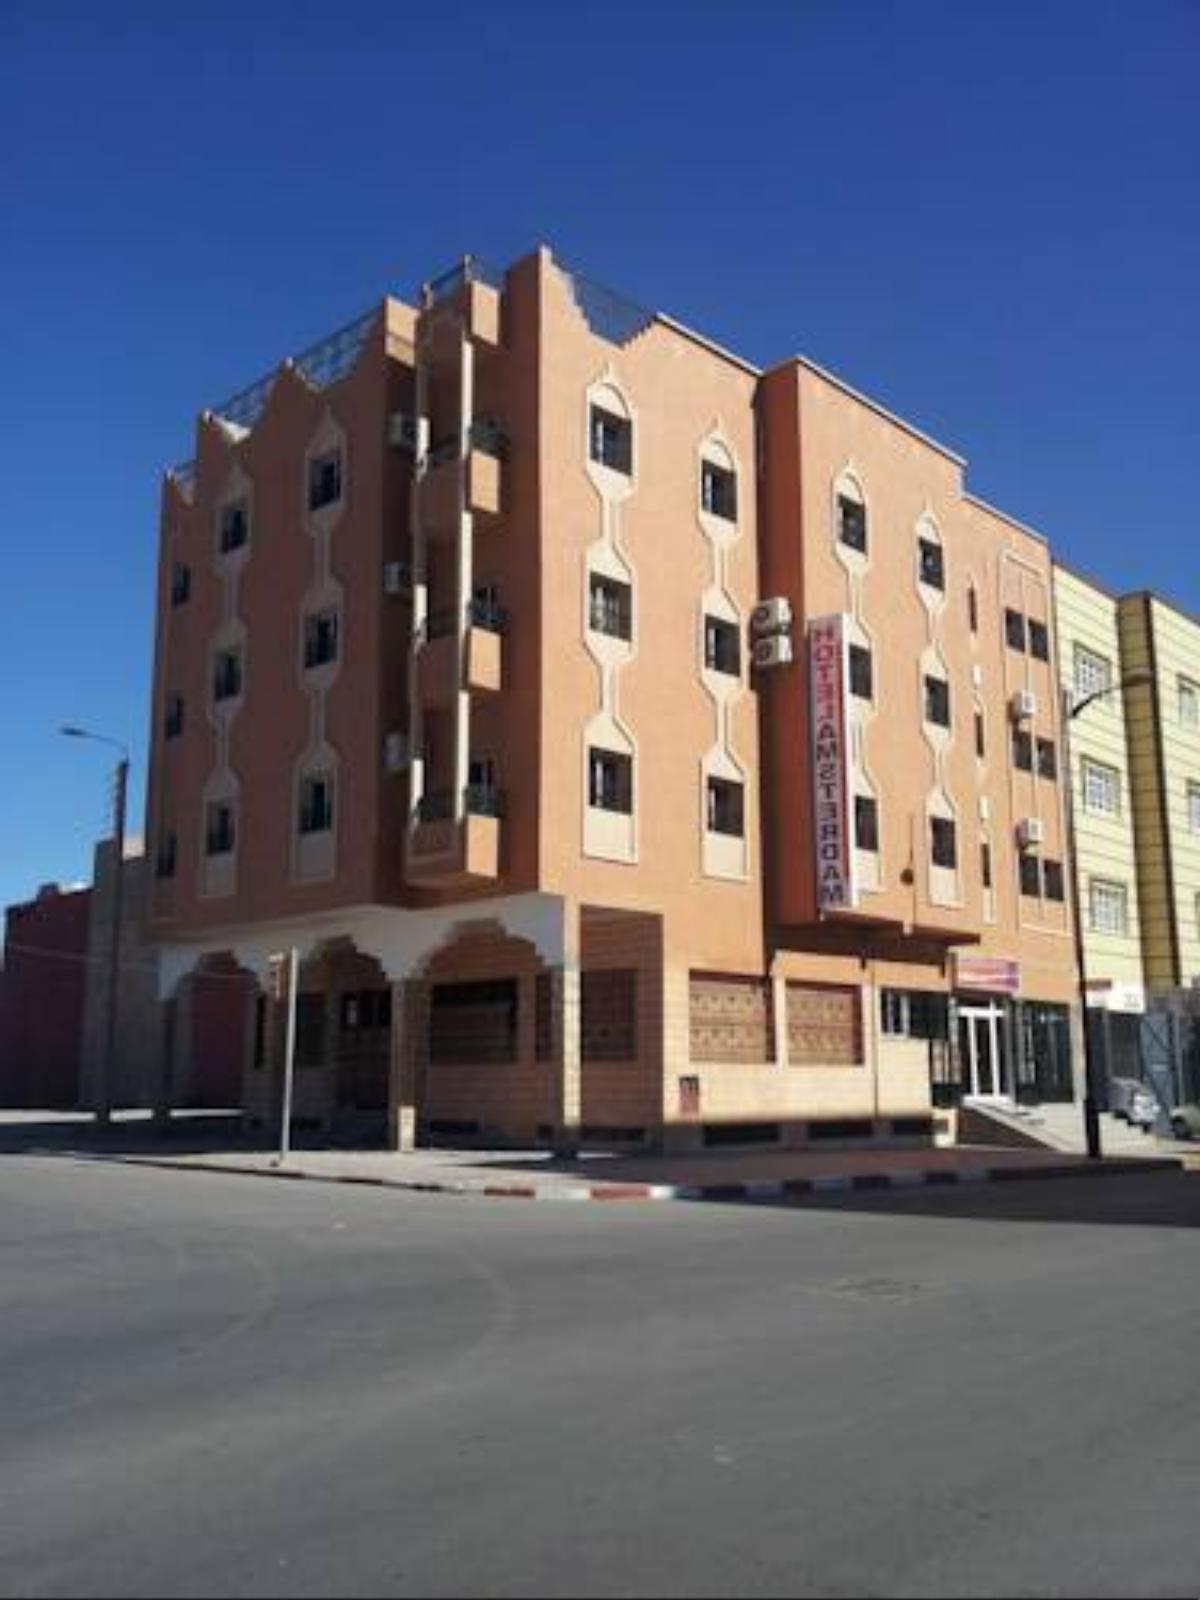 Hôtel Amsterdam Hotel Ouarzazate Morocco